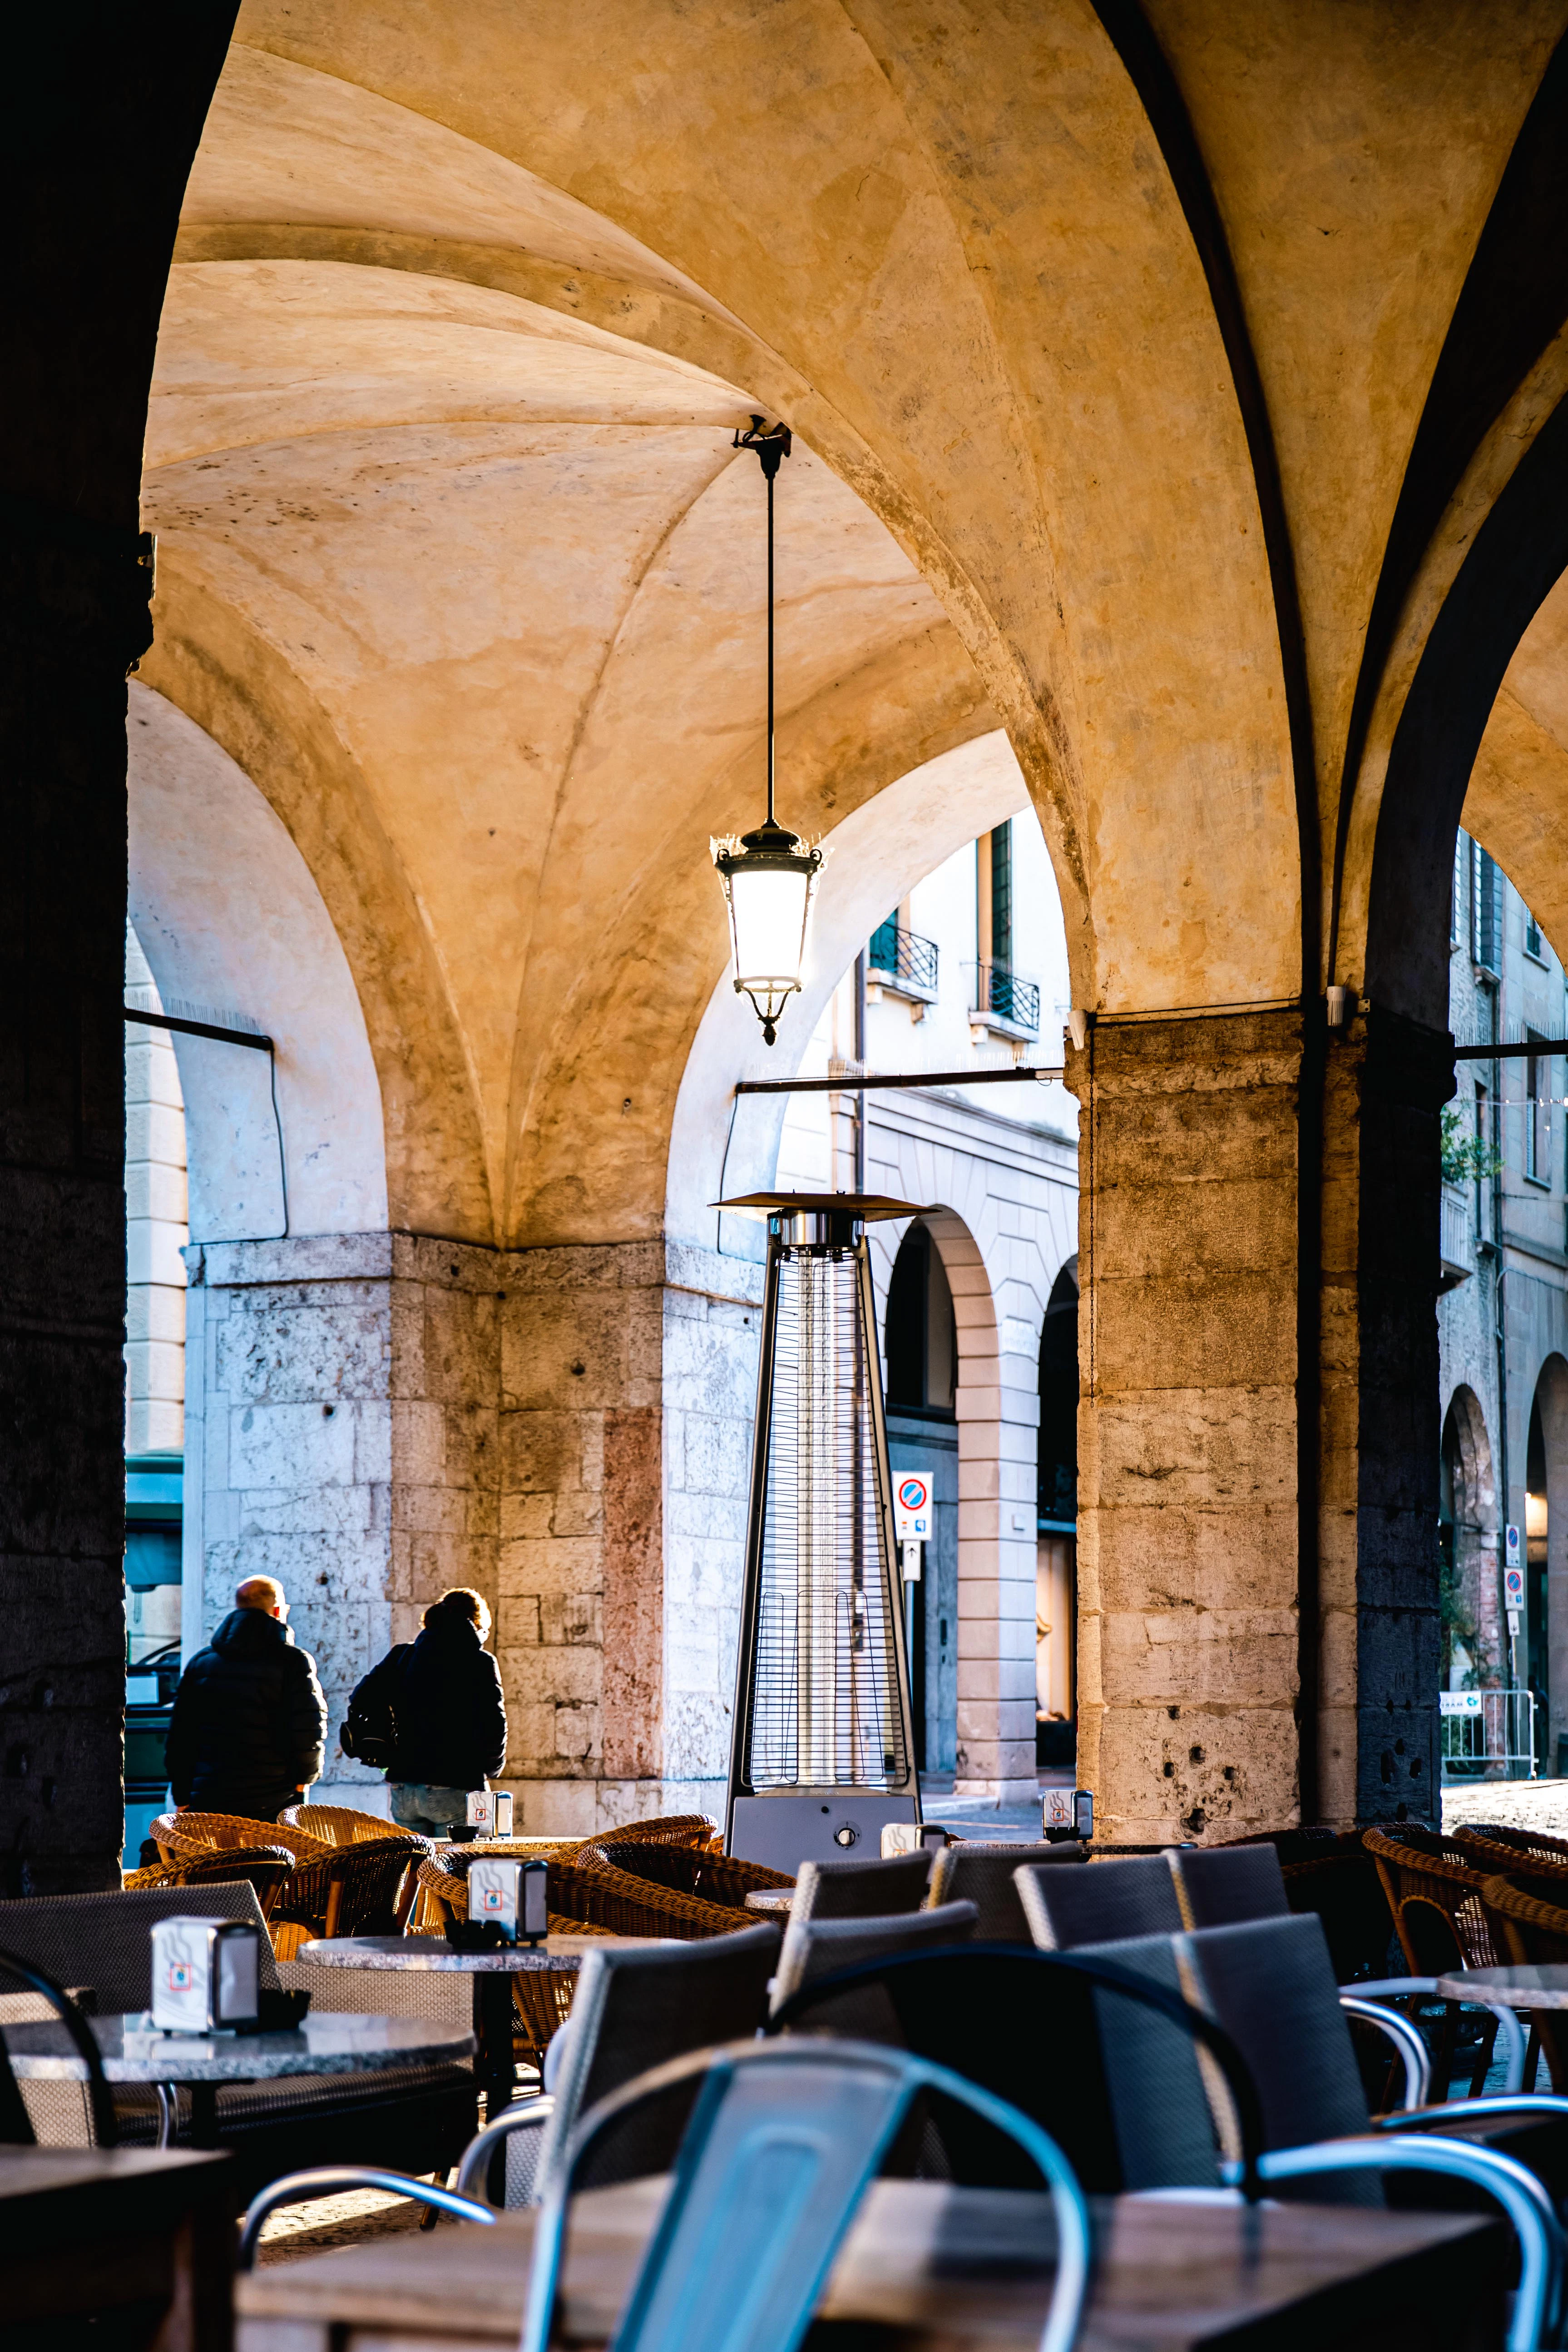 Archways in an Italian piazza.